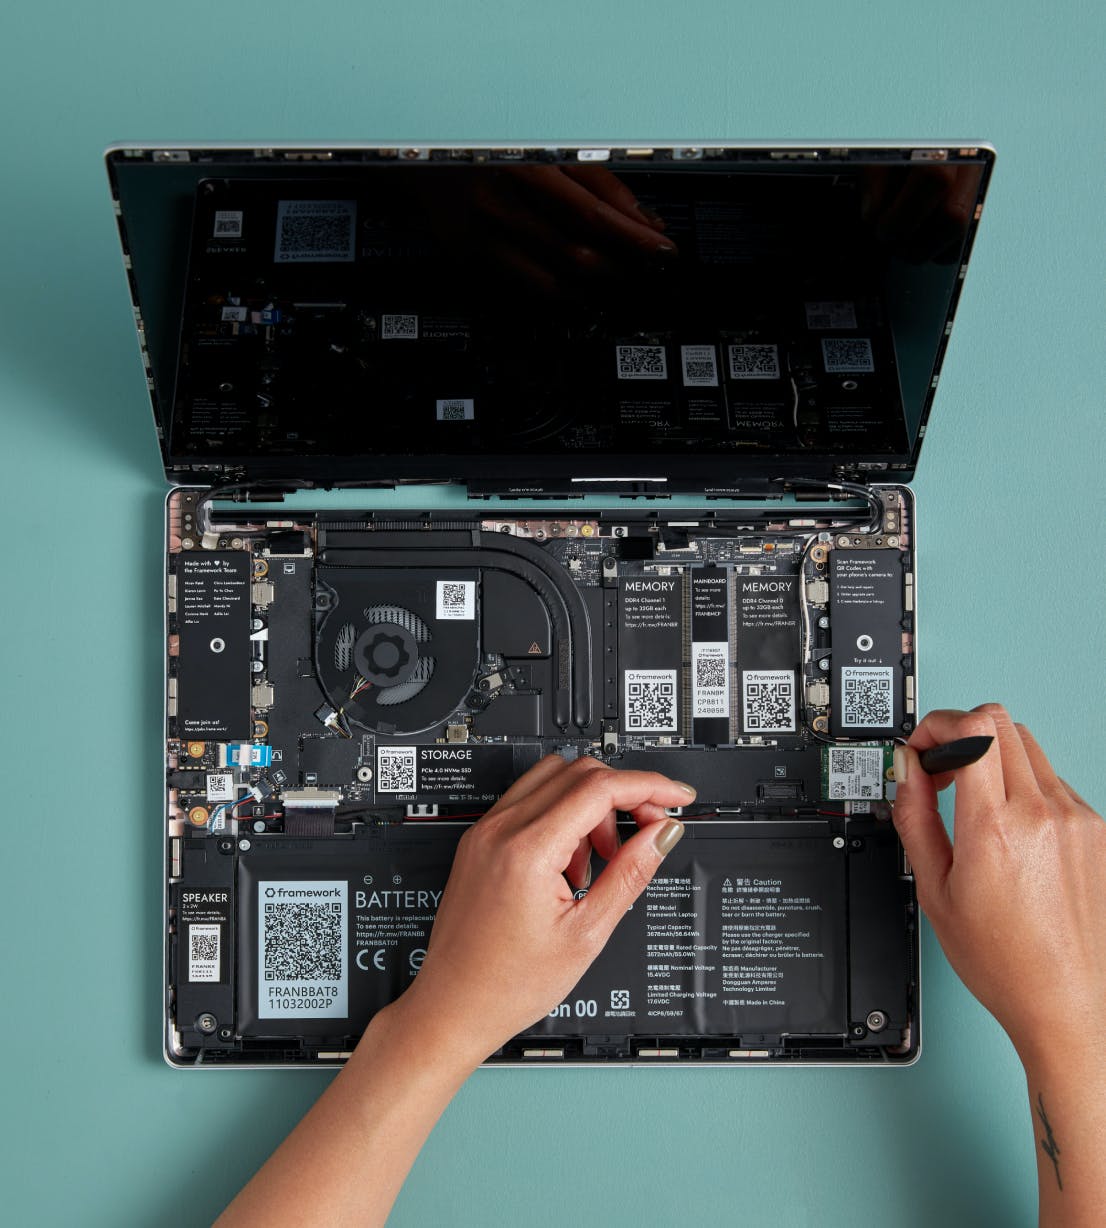 The disassembled Framework laptop